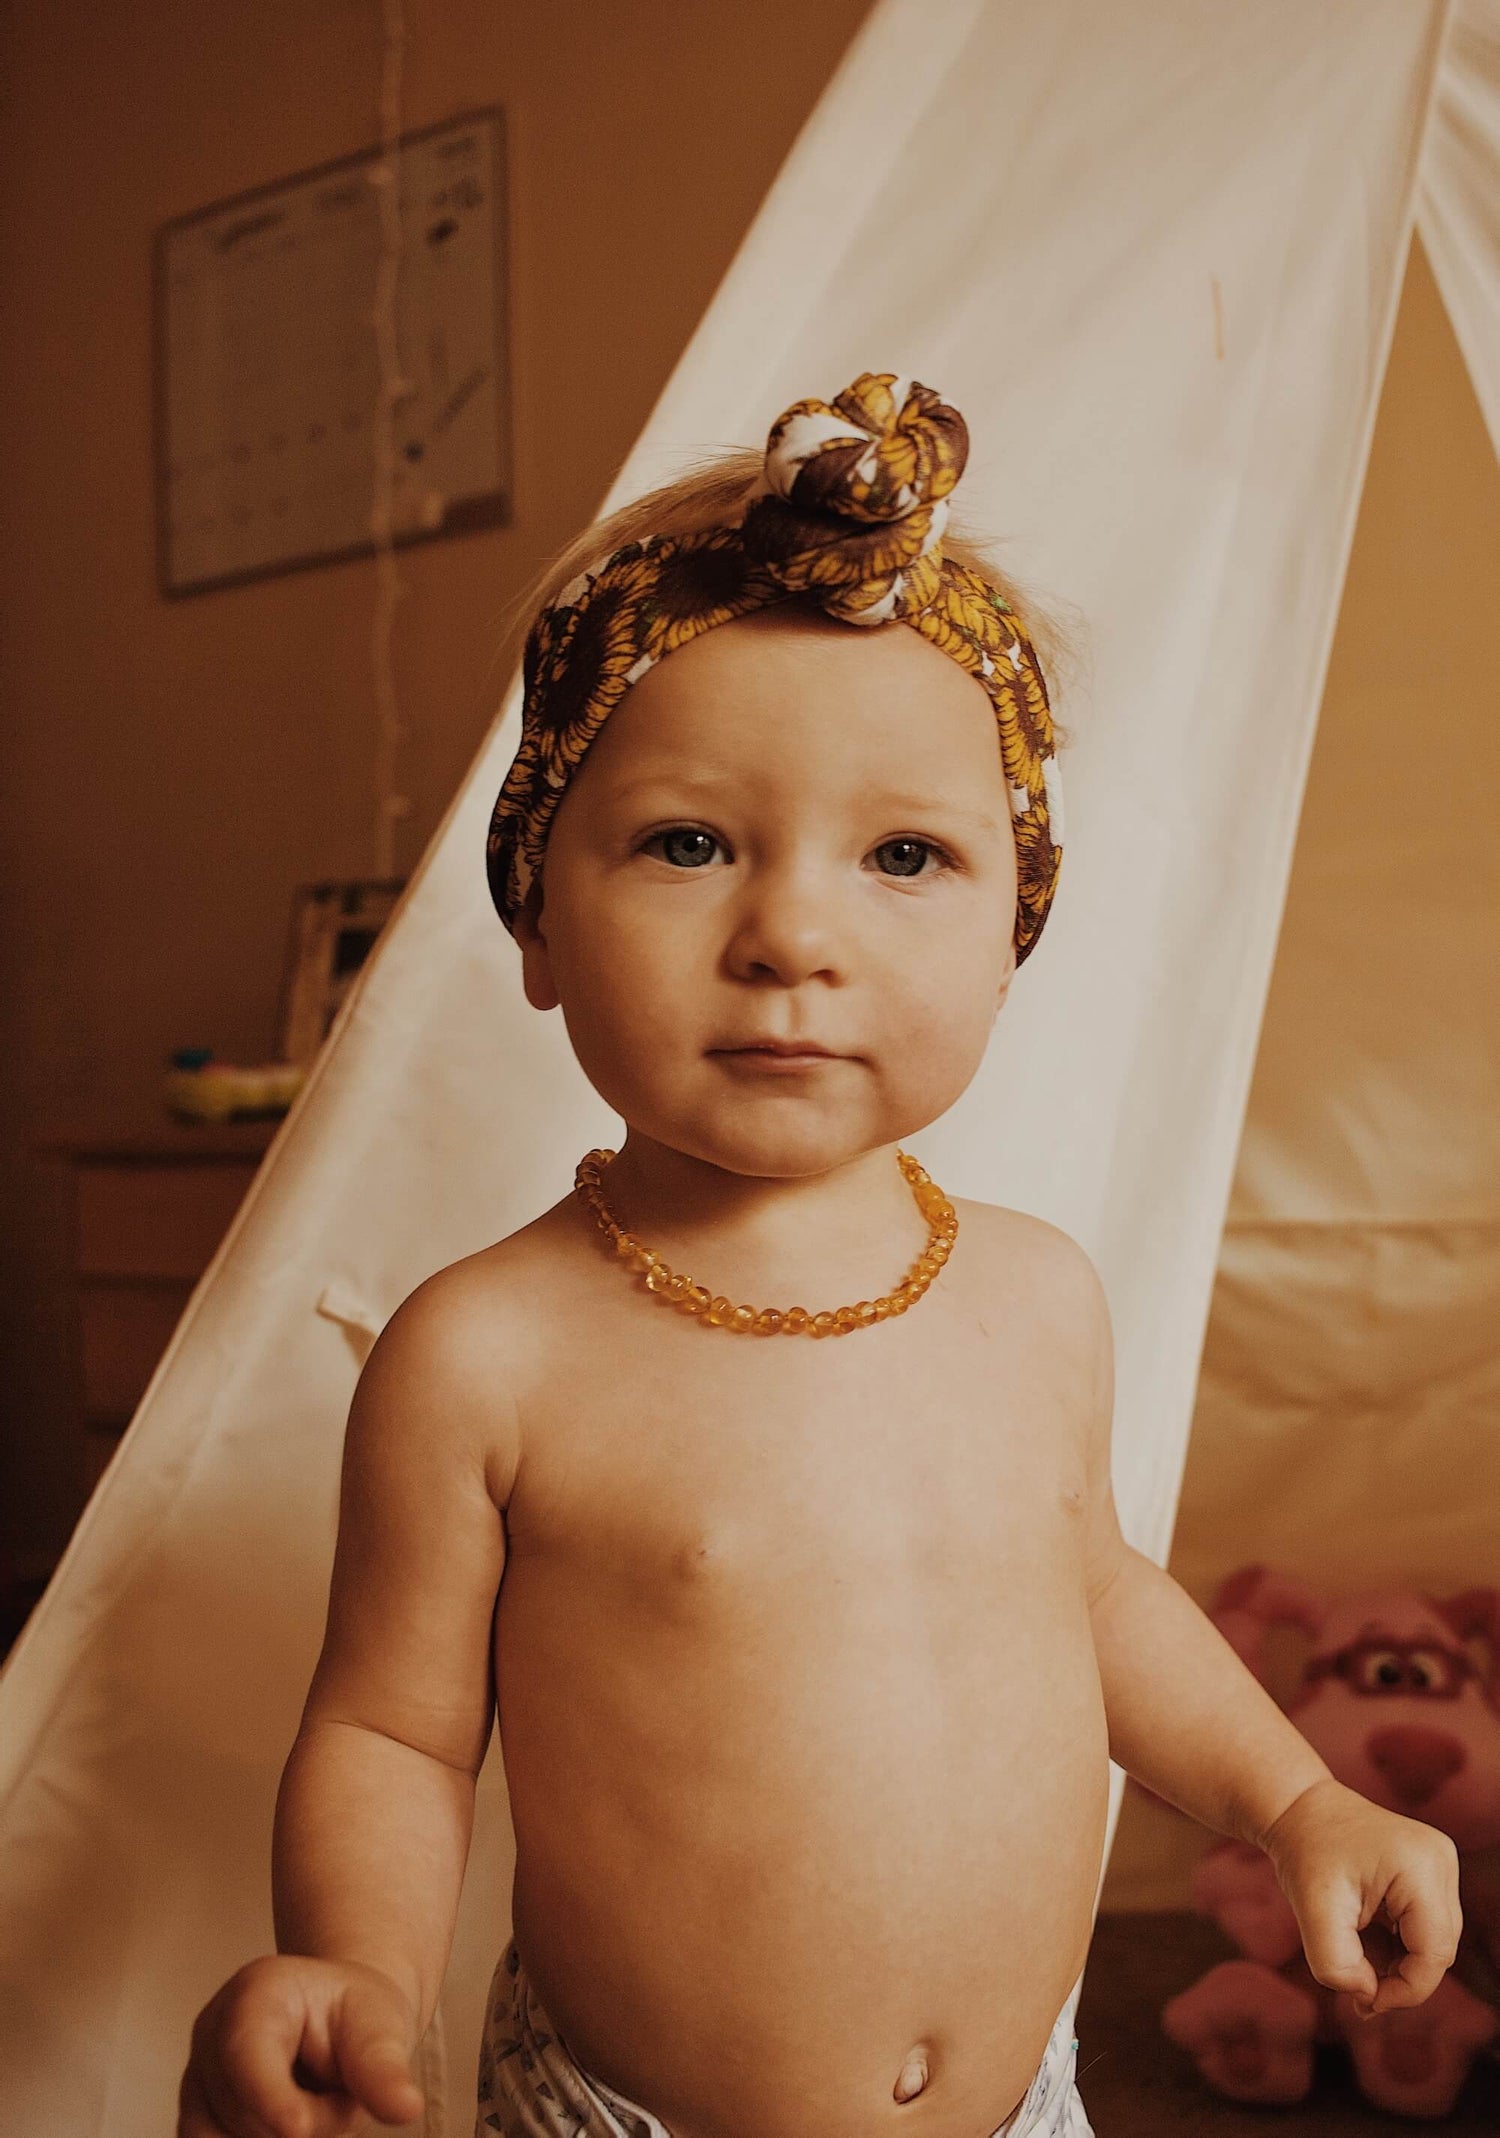 Baby Girl Wearing Amber Guru's Baltic Amber Teething Necklace In Honey Color, Posing In A Room